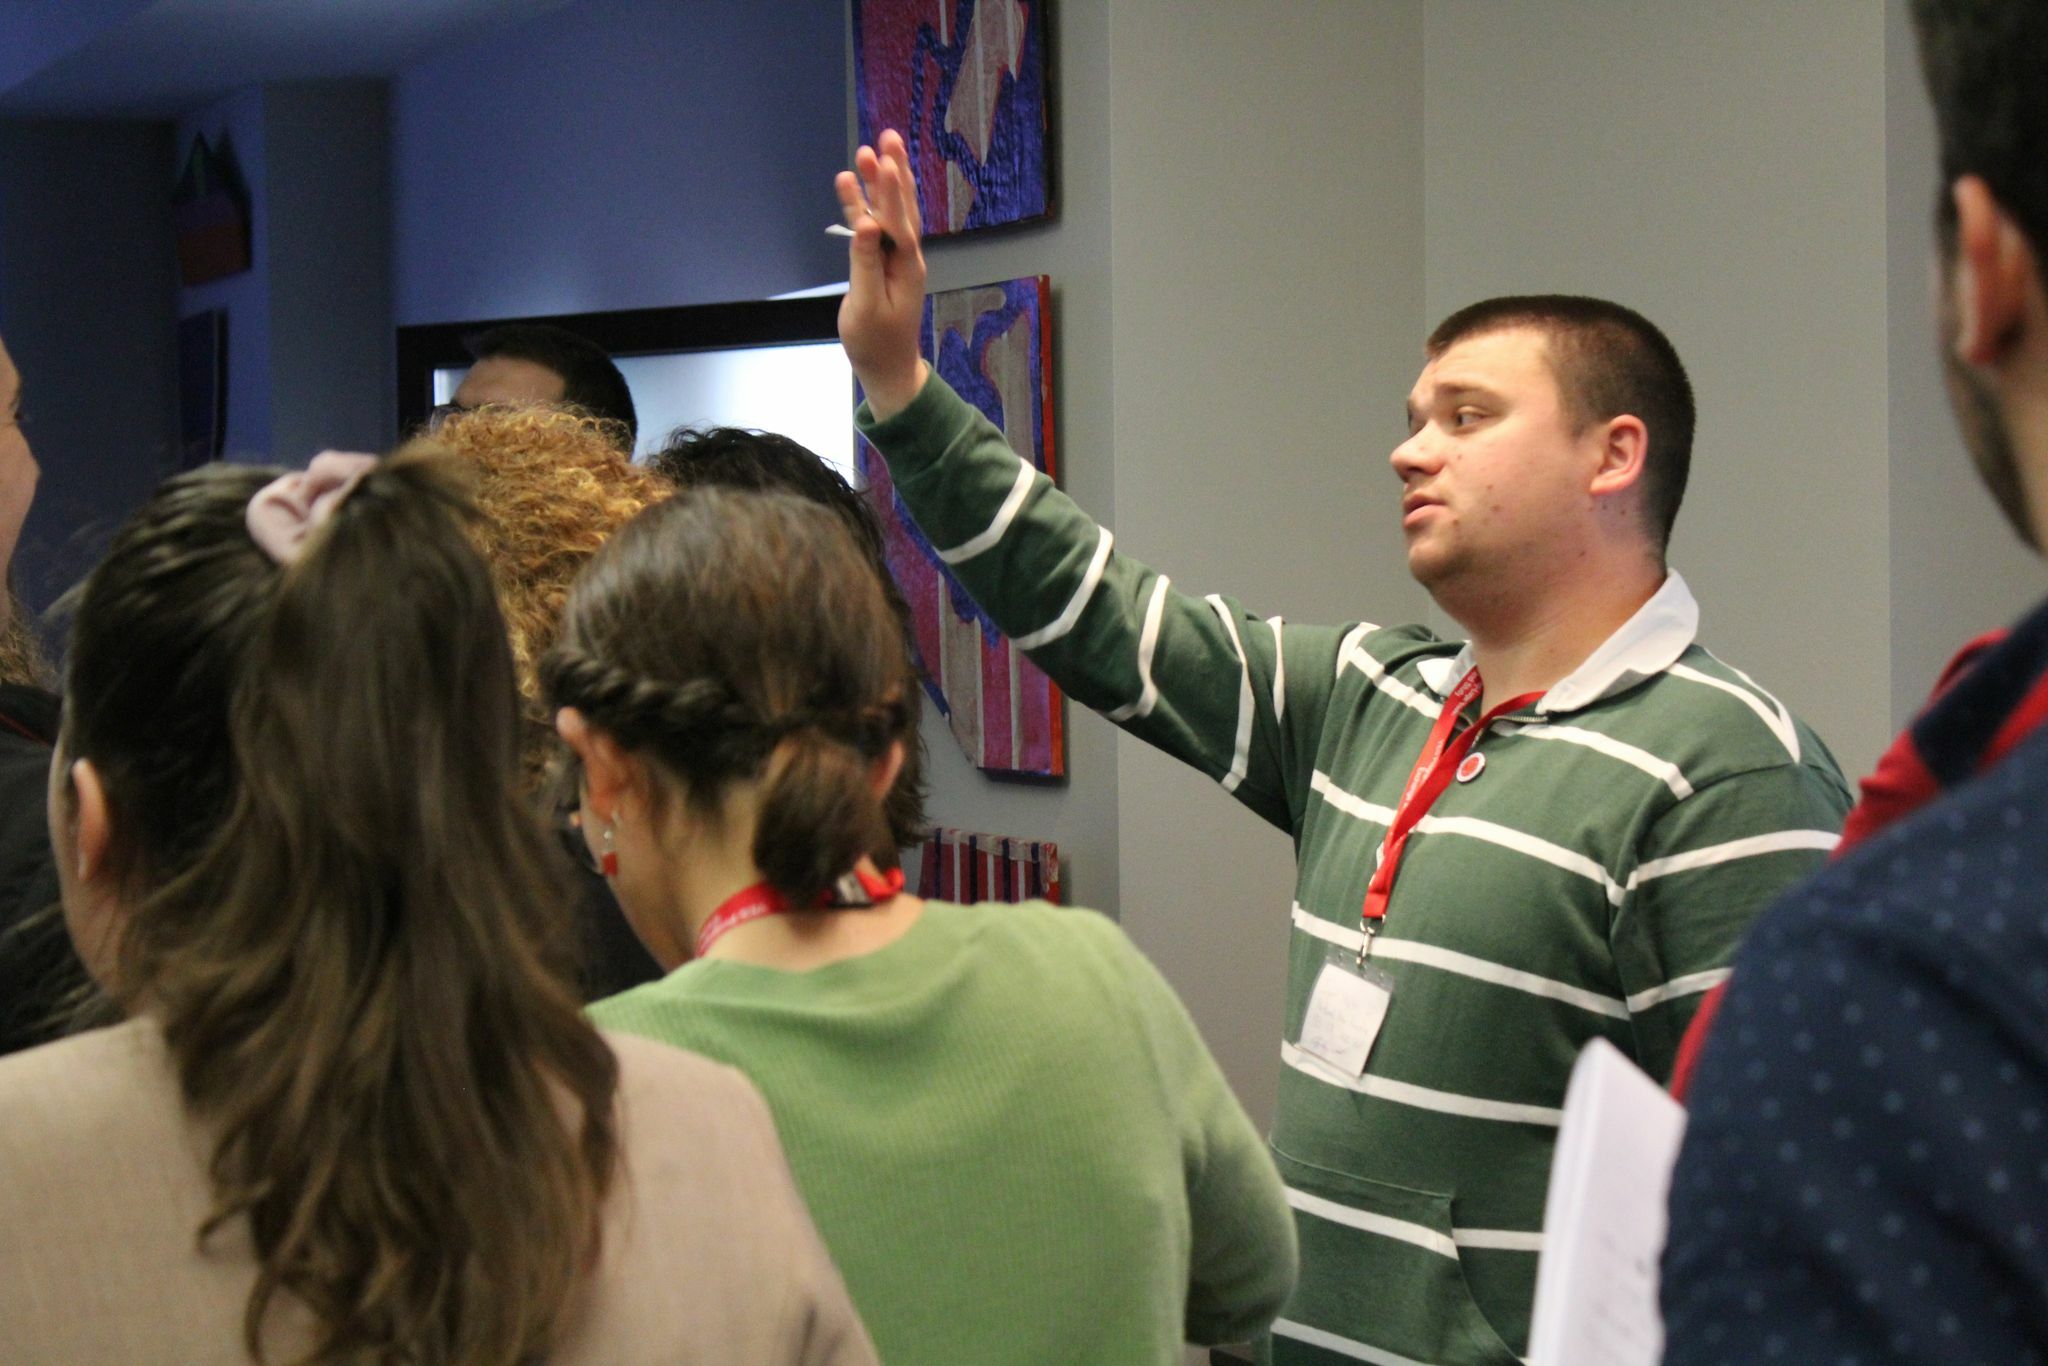 Student Raises Their Hand In Workshop